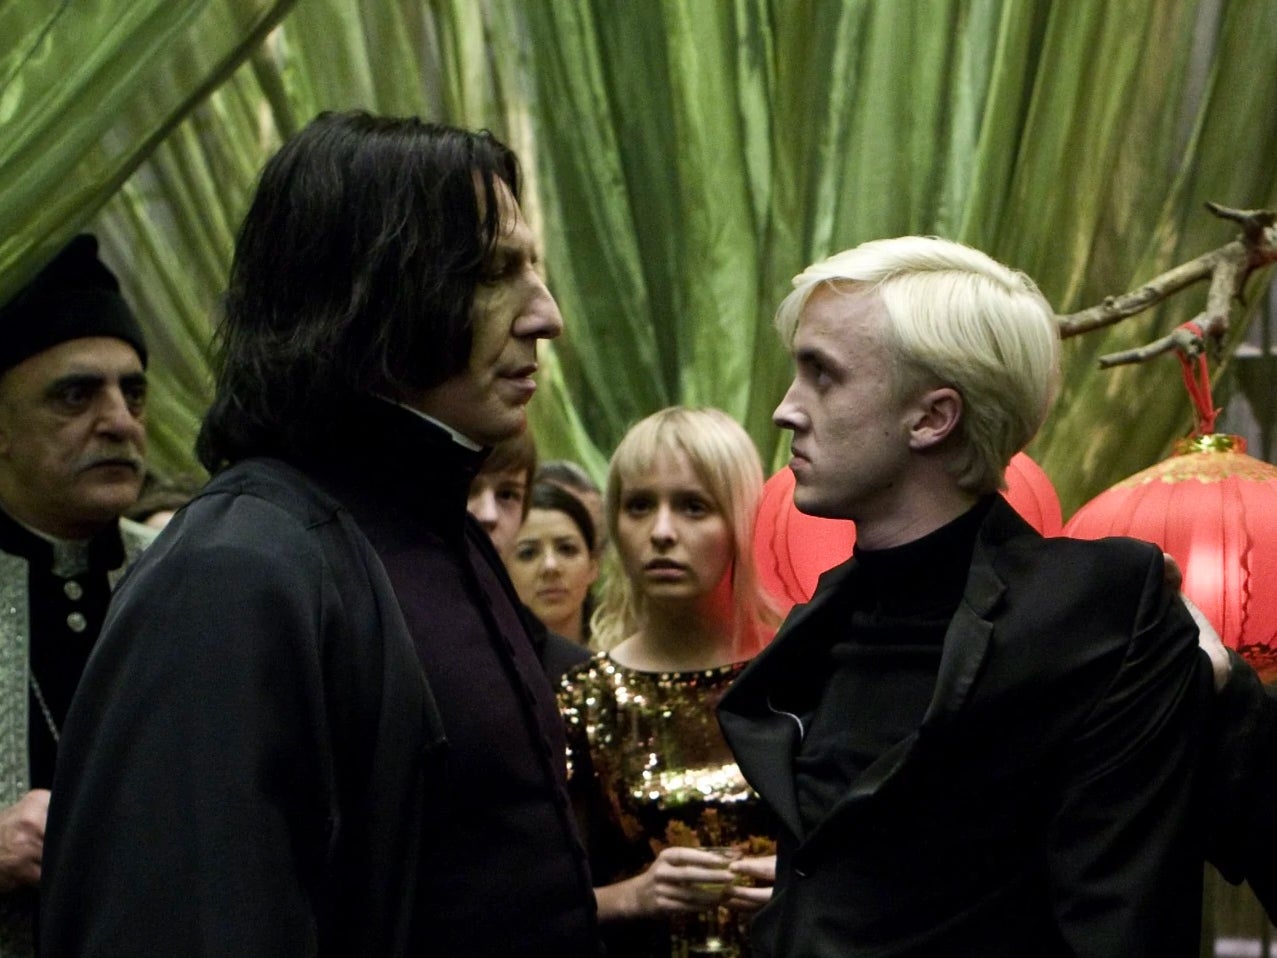 Alan Rickman (left) and Tom Felton in Harry Potter